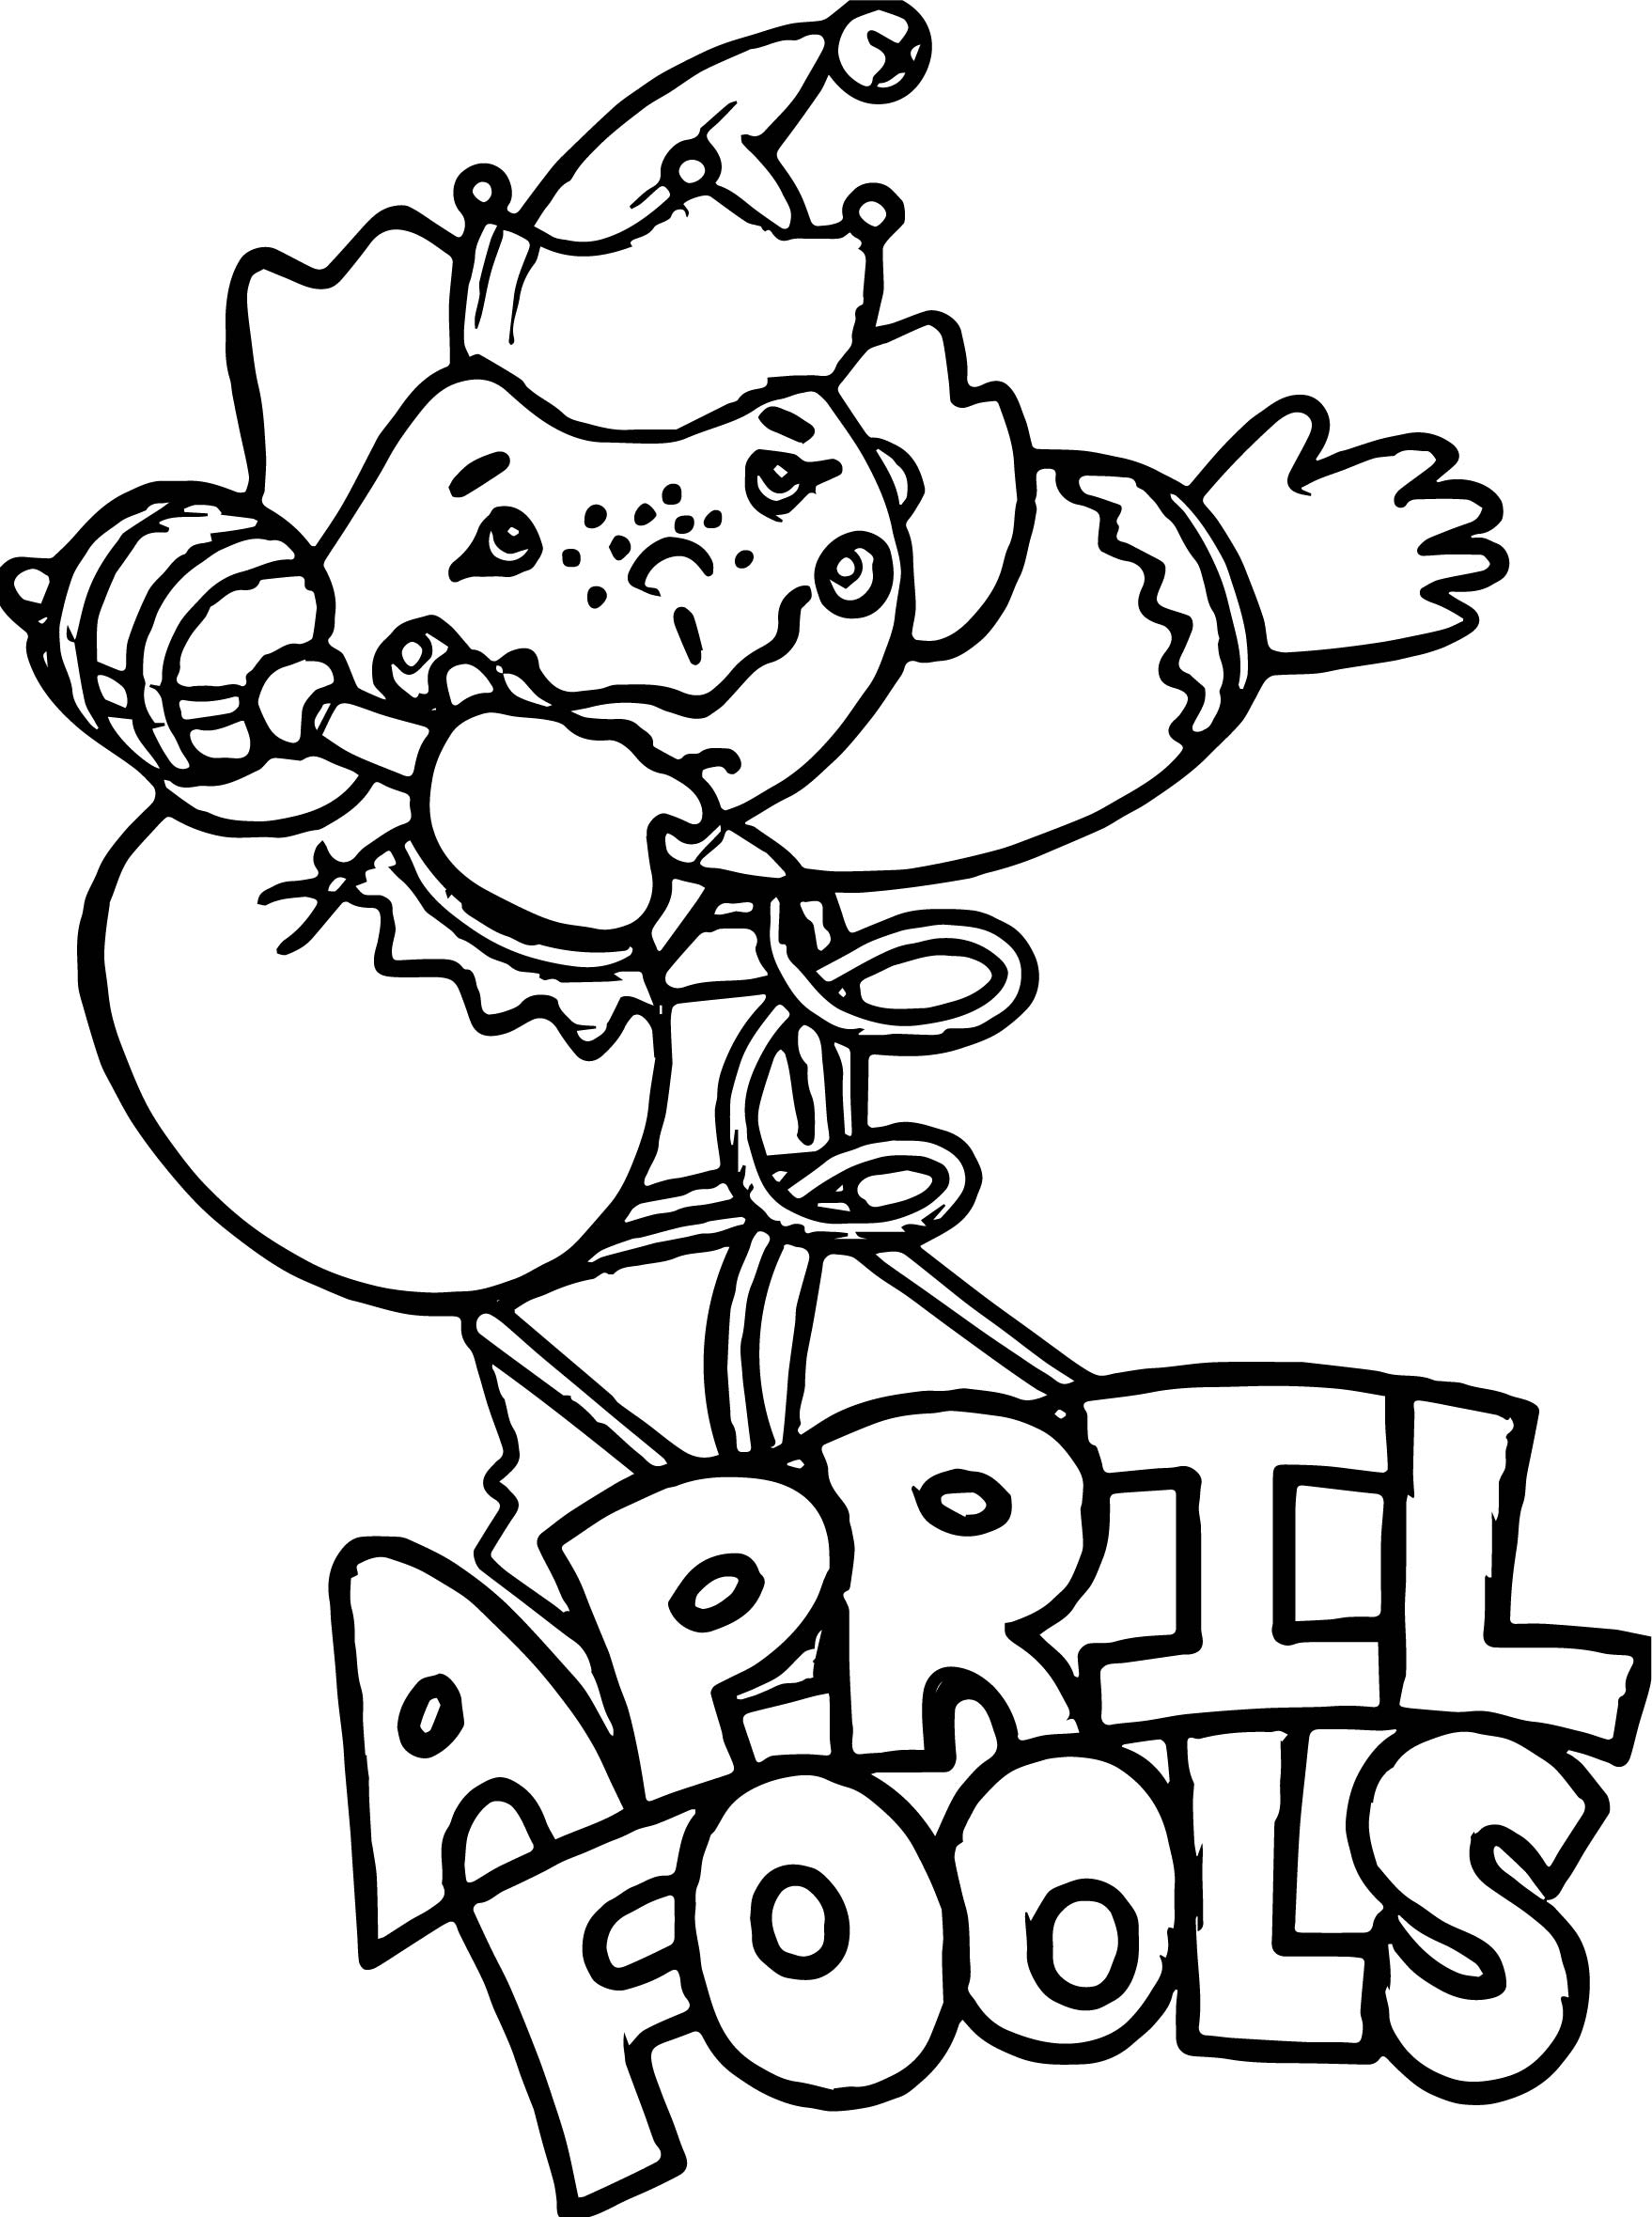 April Fool Child Coloring Page | Wecoloringpage.com